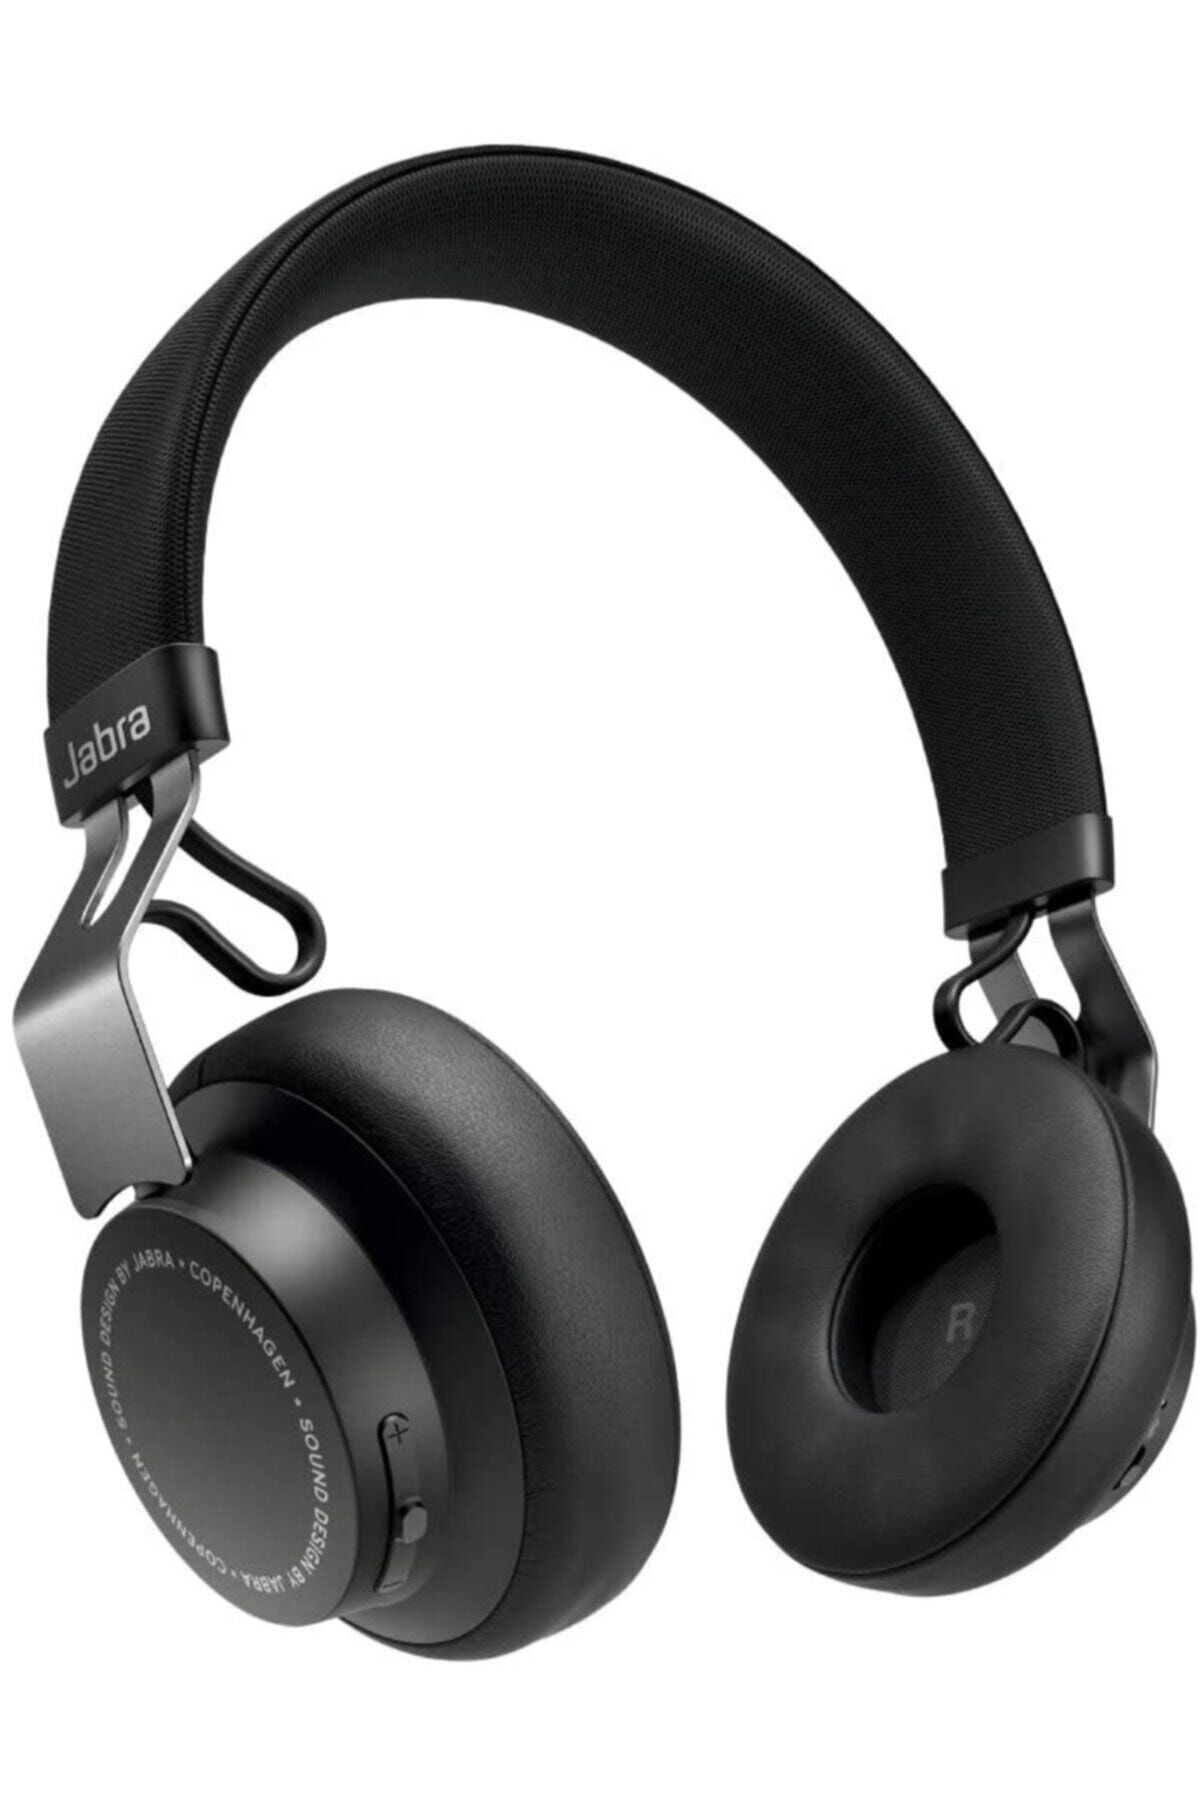 Jabra Elite 25h Kablosuz Kulak Üstü Bluetooth Kulaklık - Titanyum Siyah Uyumlu